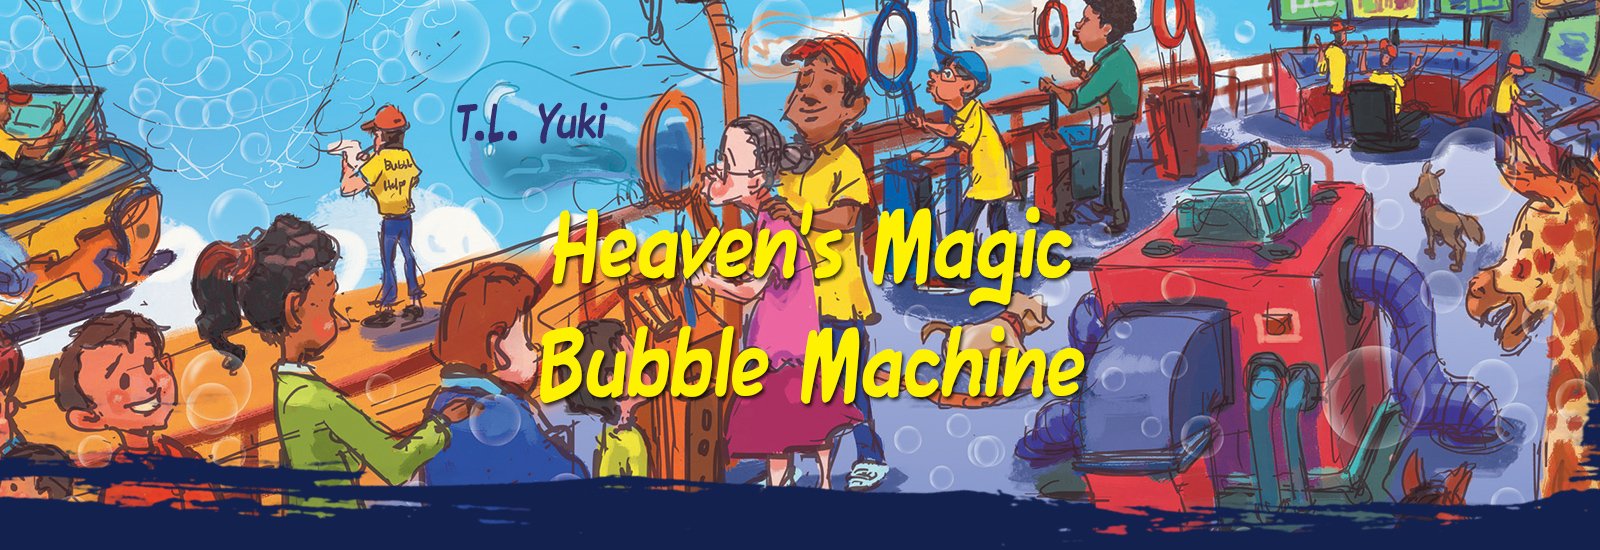 Heaven’s Magic Bubble Machine